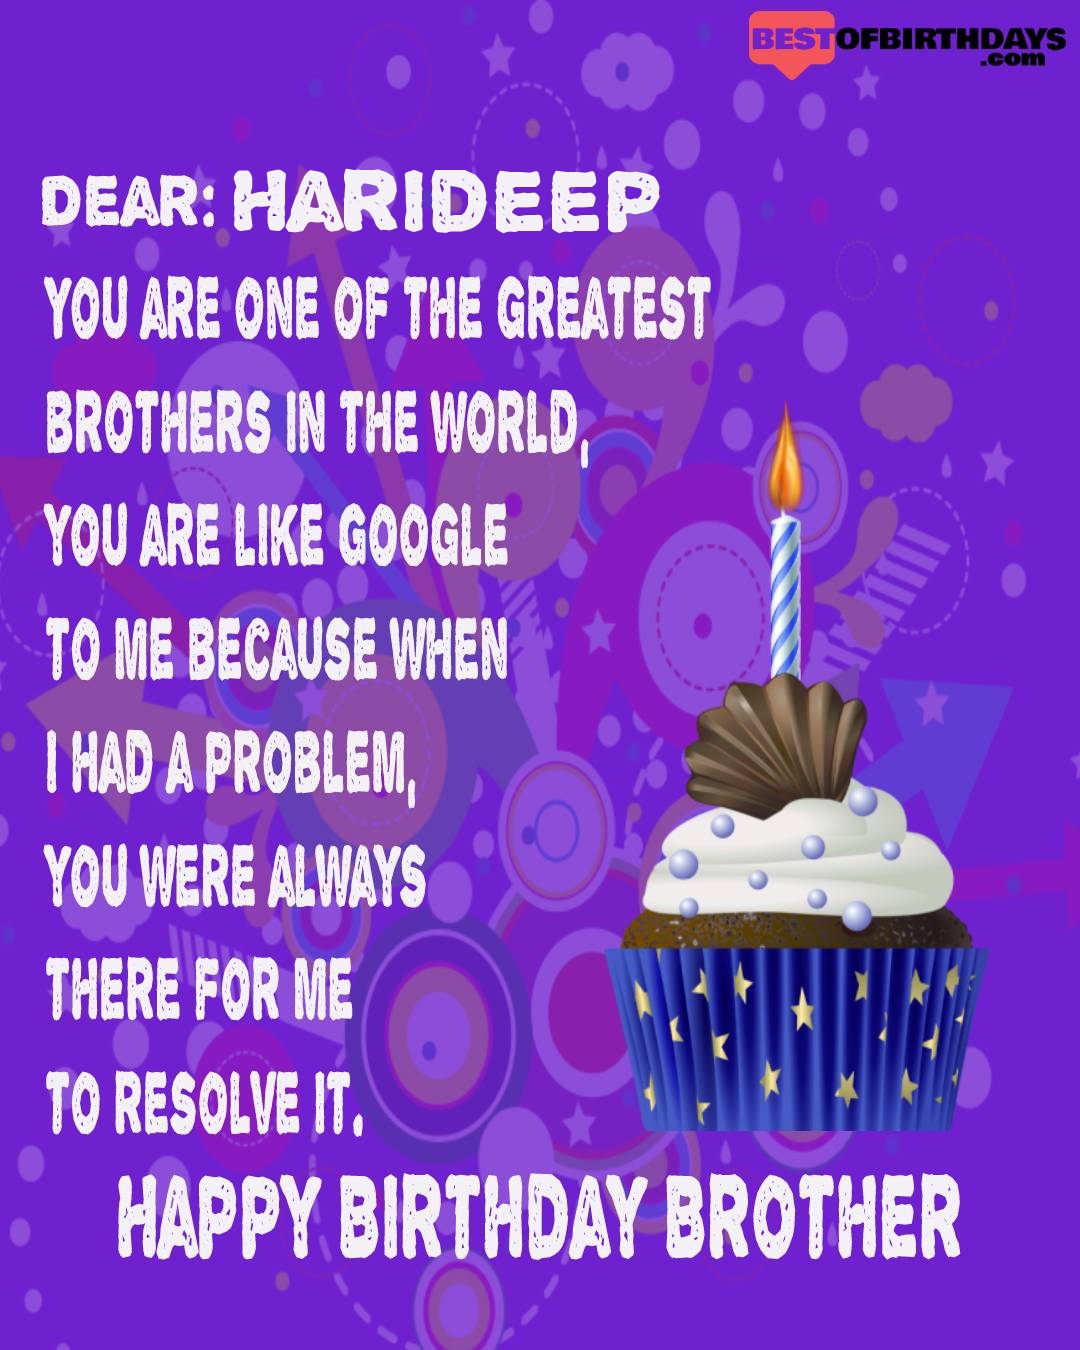 Happy birthday harideep bhai brother bro